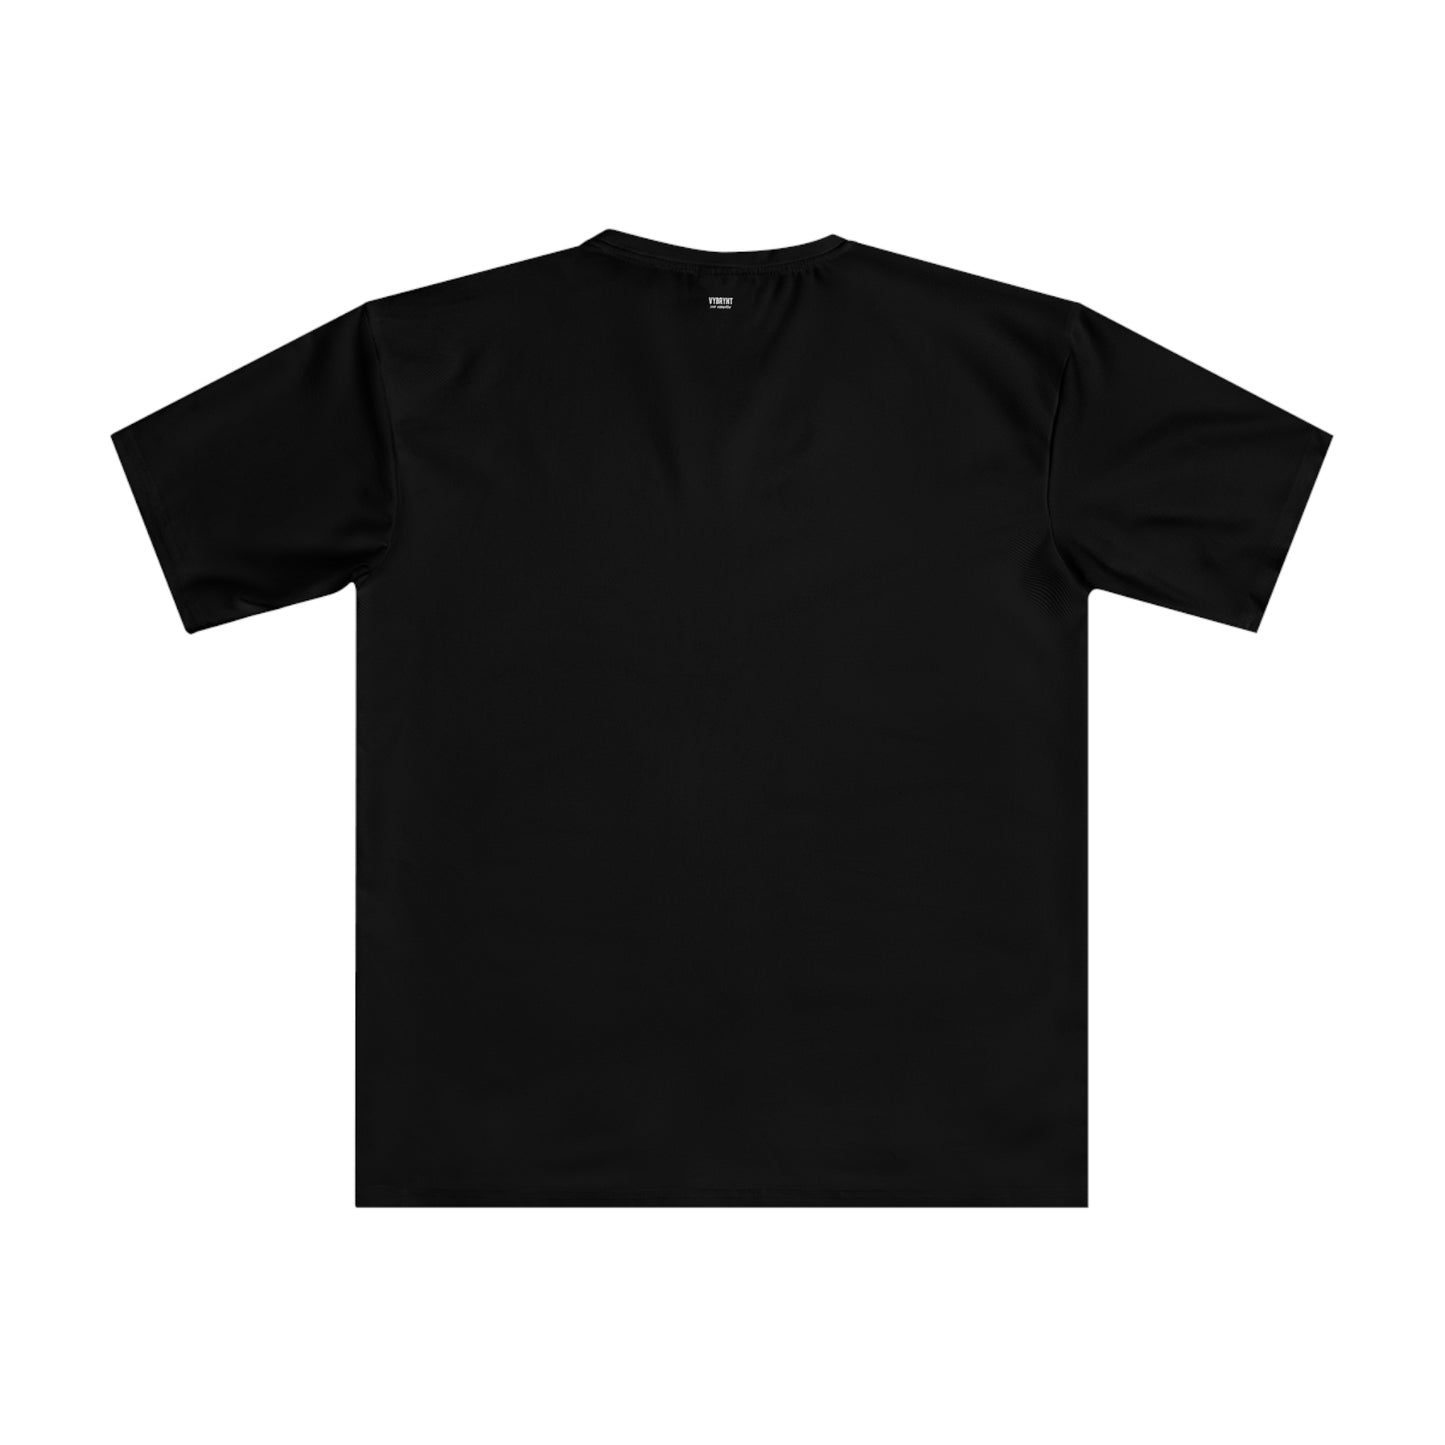 Lincoln Friendship Men's Black T-Shirt